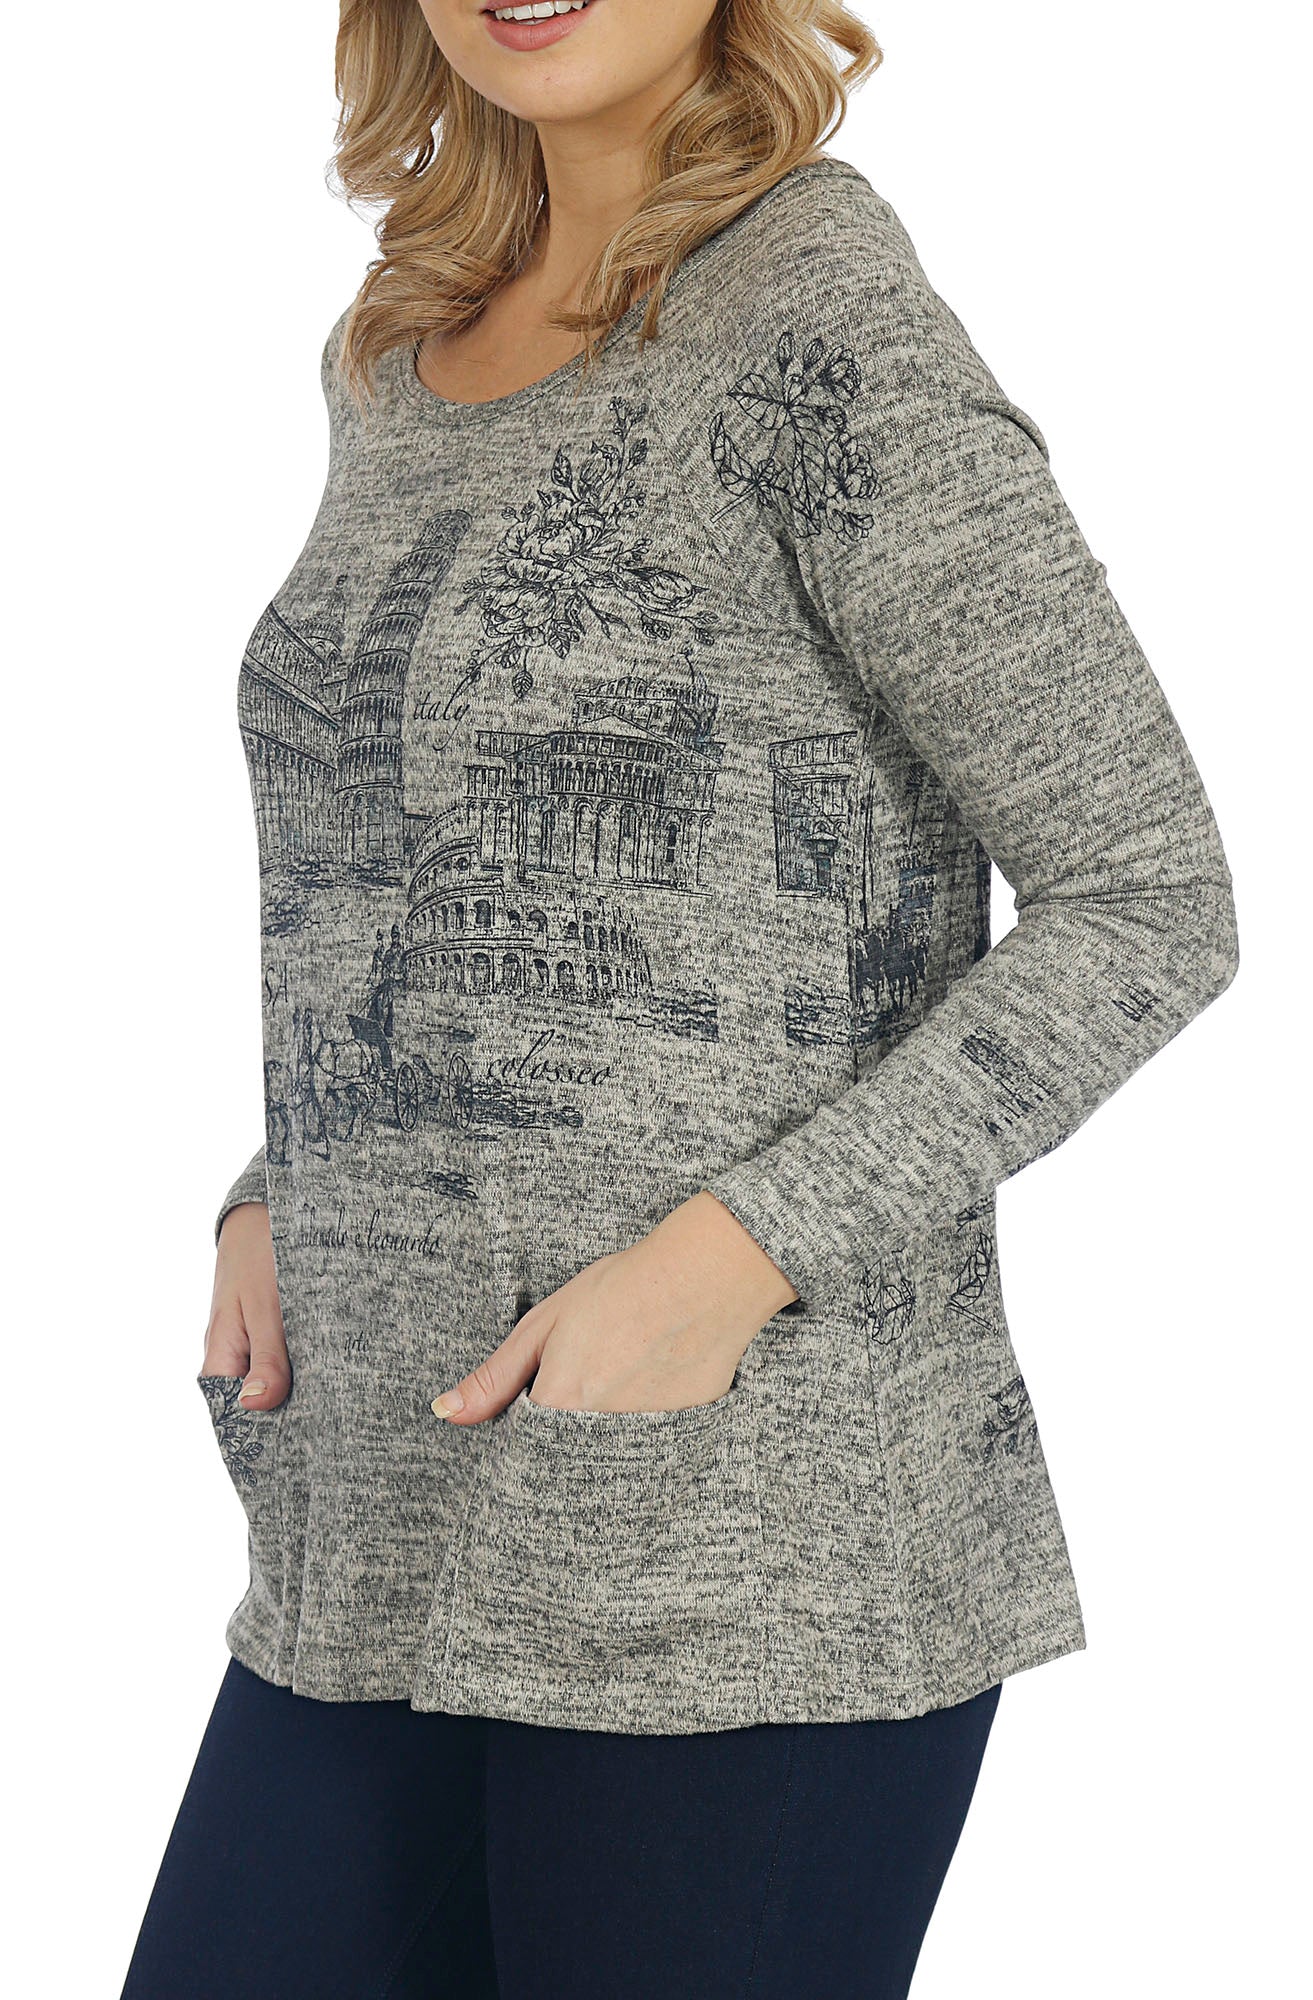 Impulse California Women's Pisa Patch Pocket Sweater